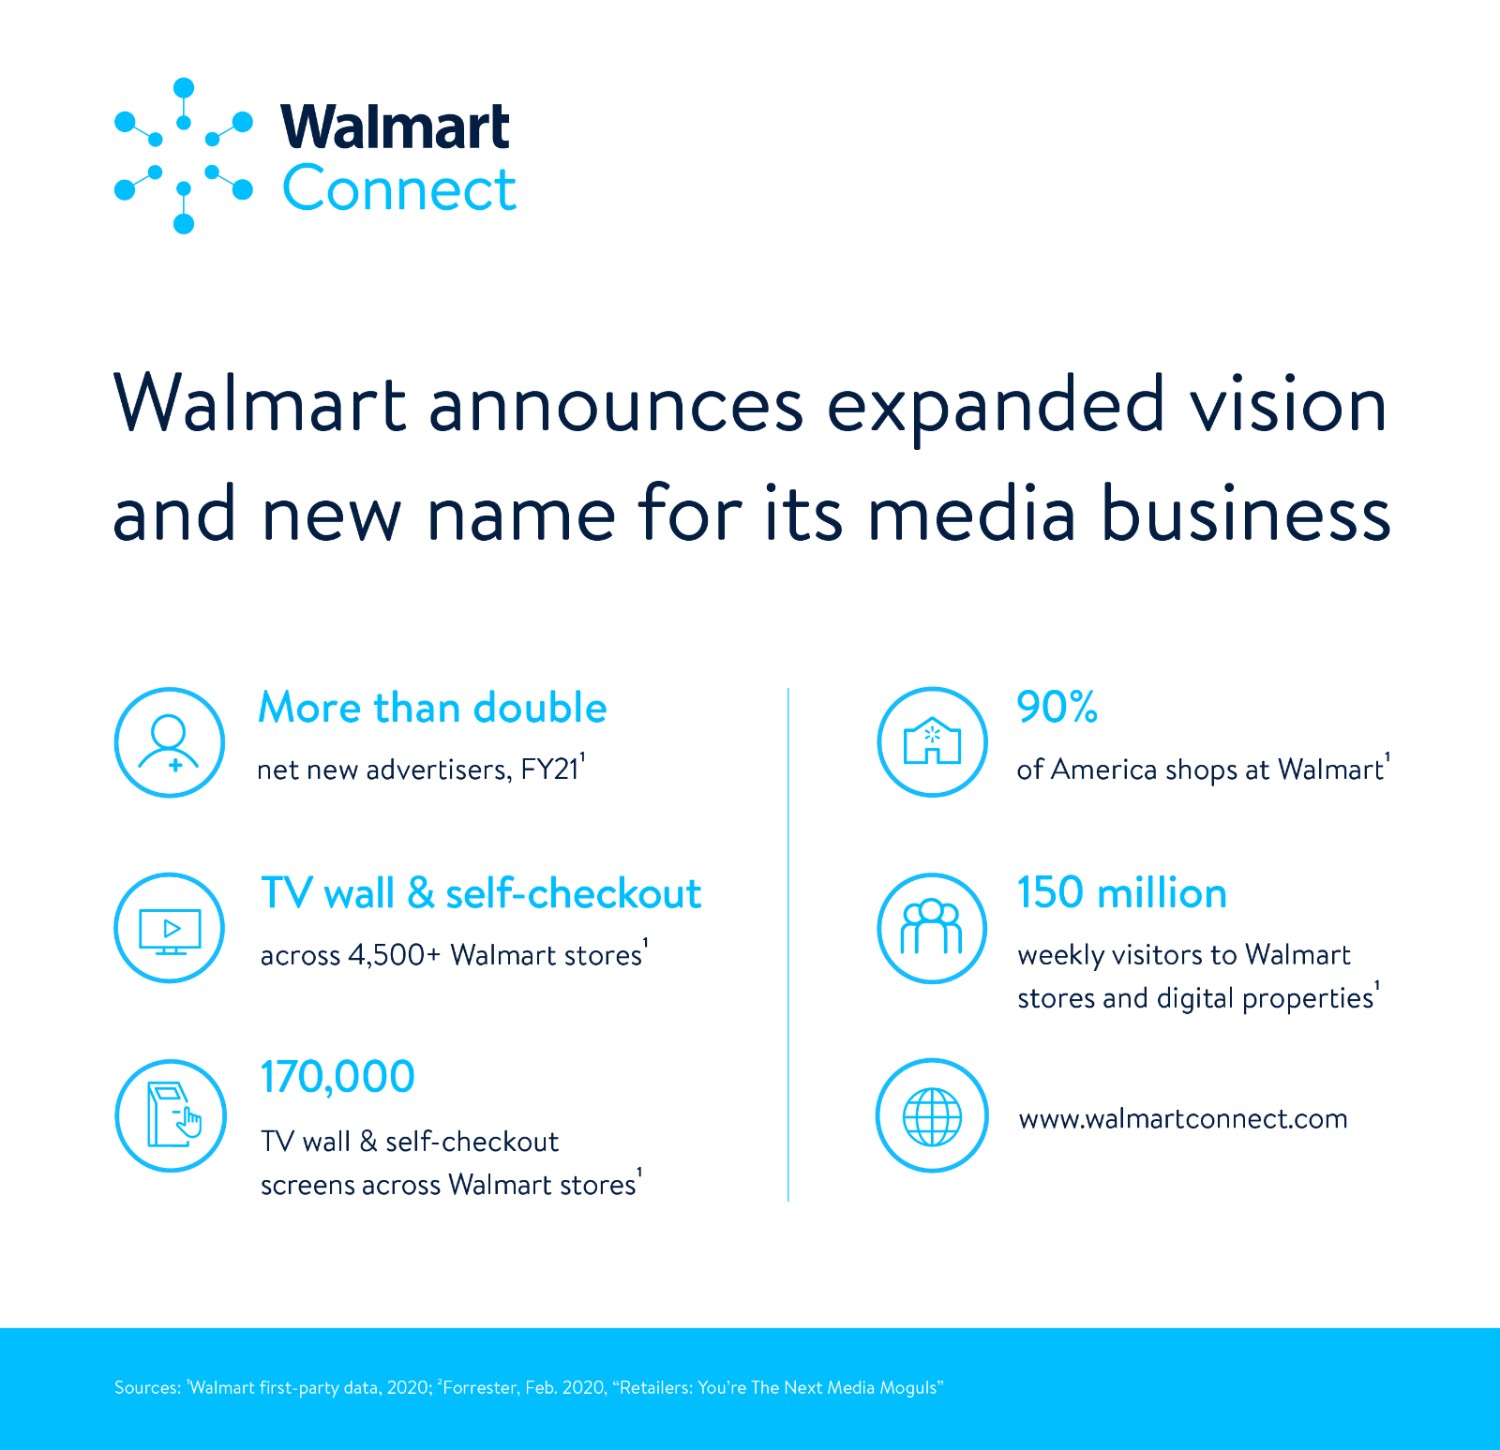 Walmart – BH1: marketing e tecnologia